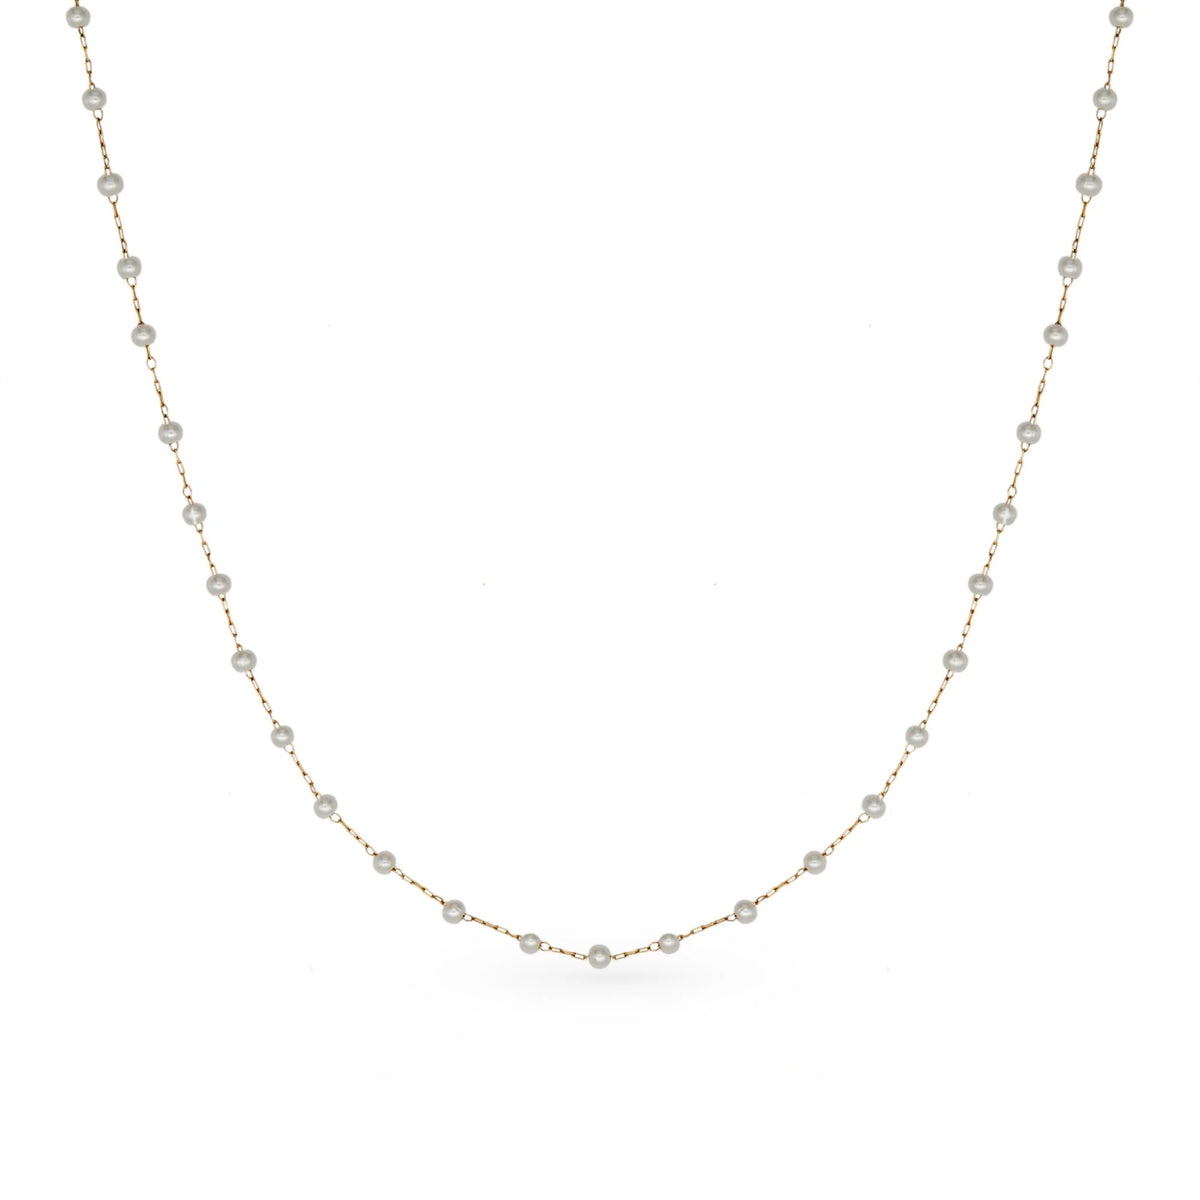 Basic pearl chain